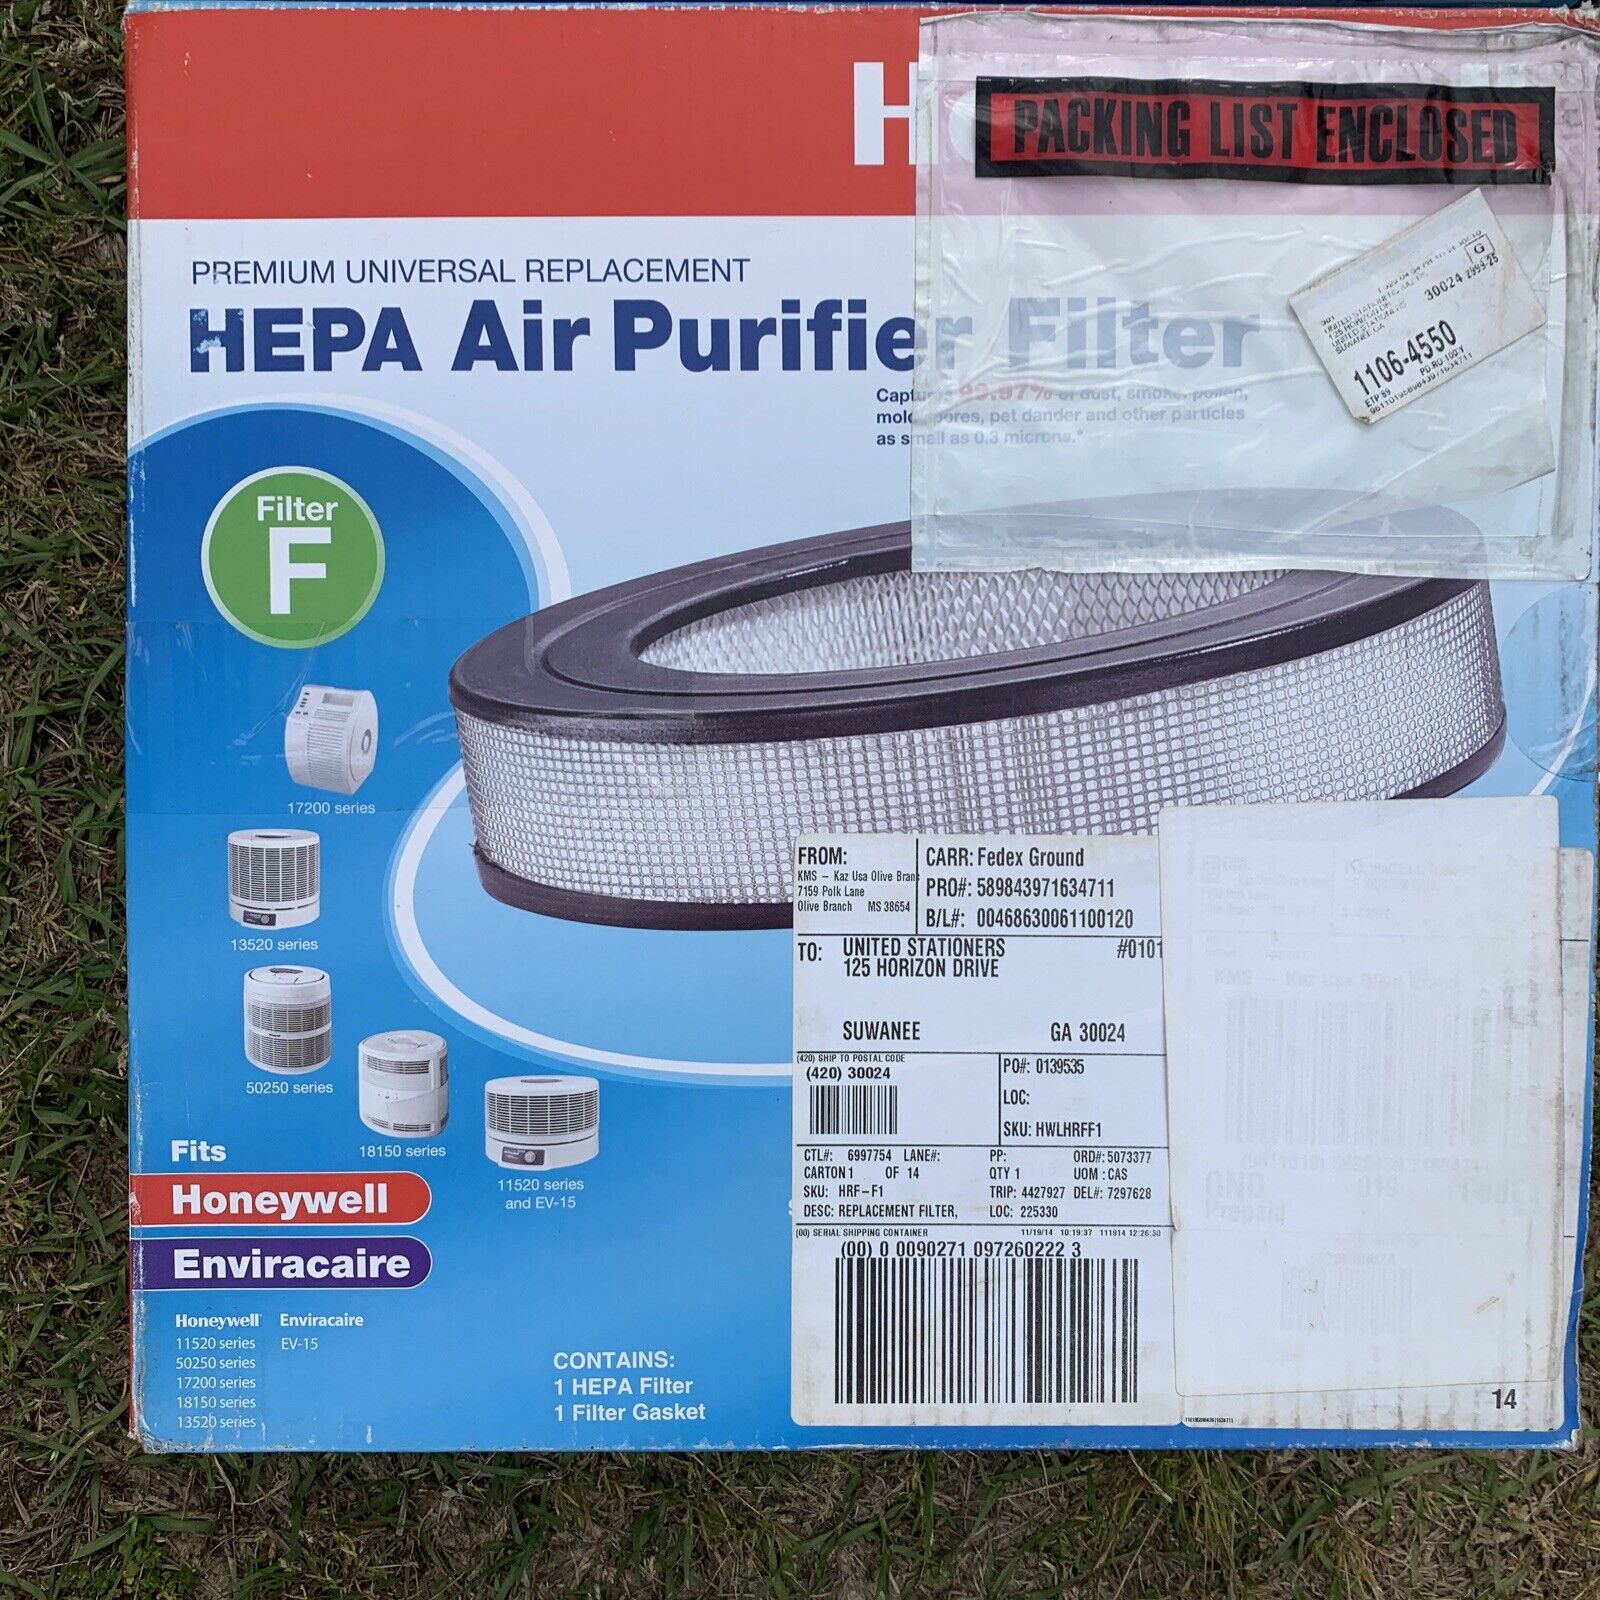 NEW Honeywell HEPA Air Purifier Filter F Universal Replacement i